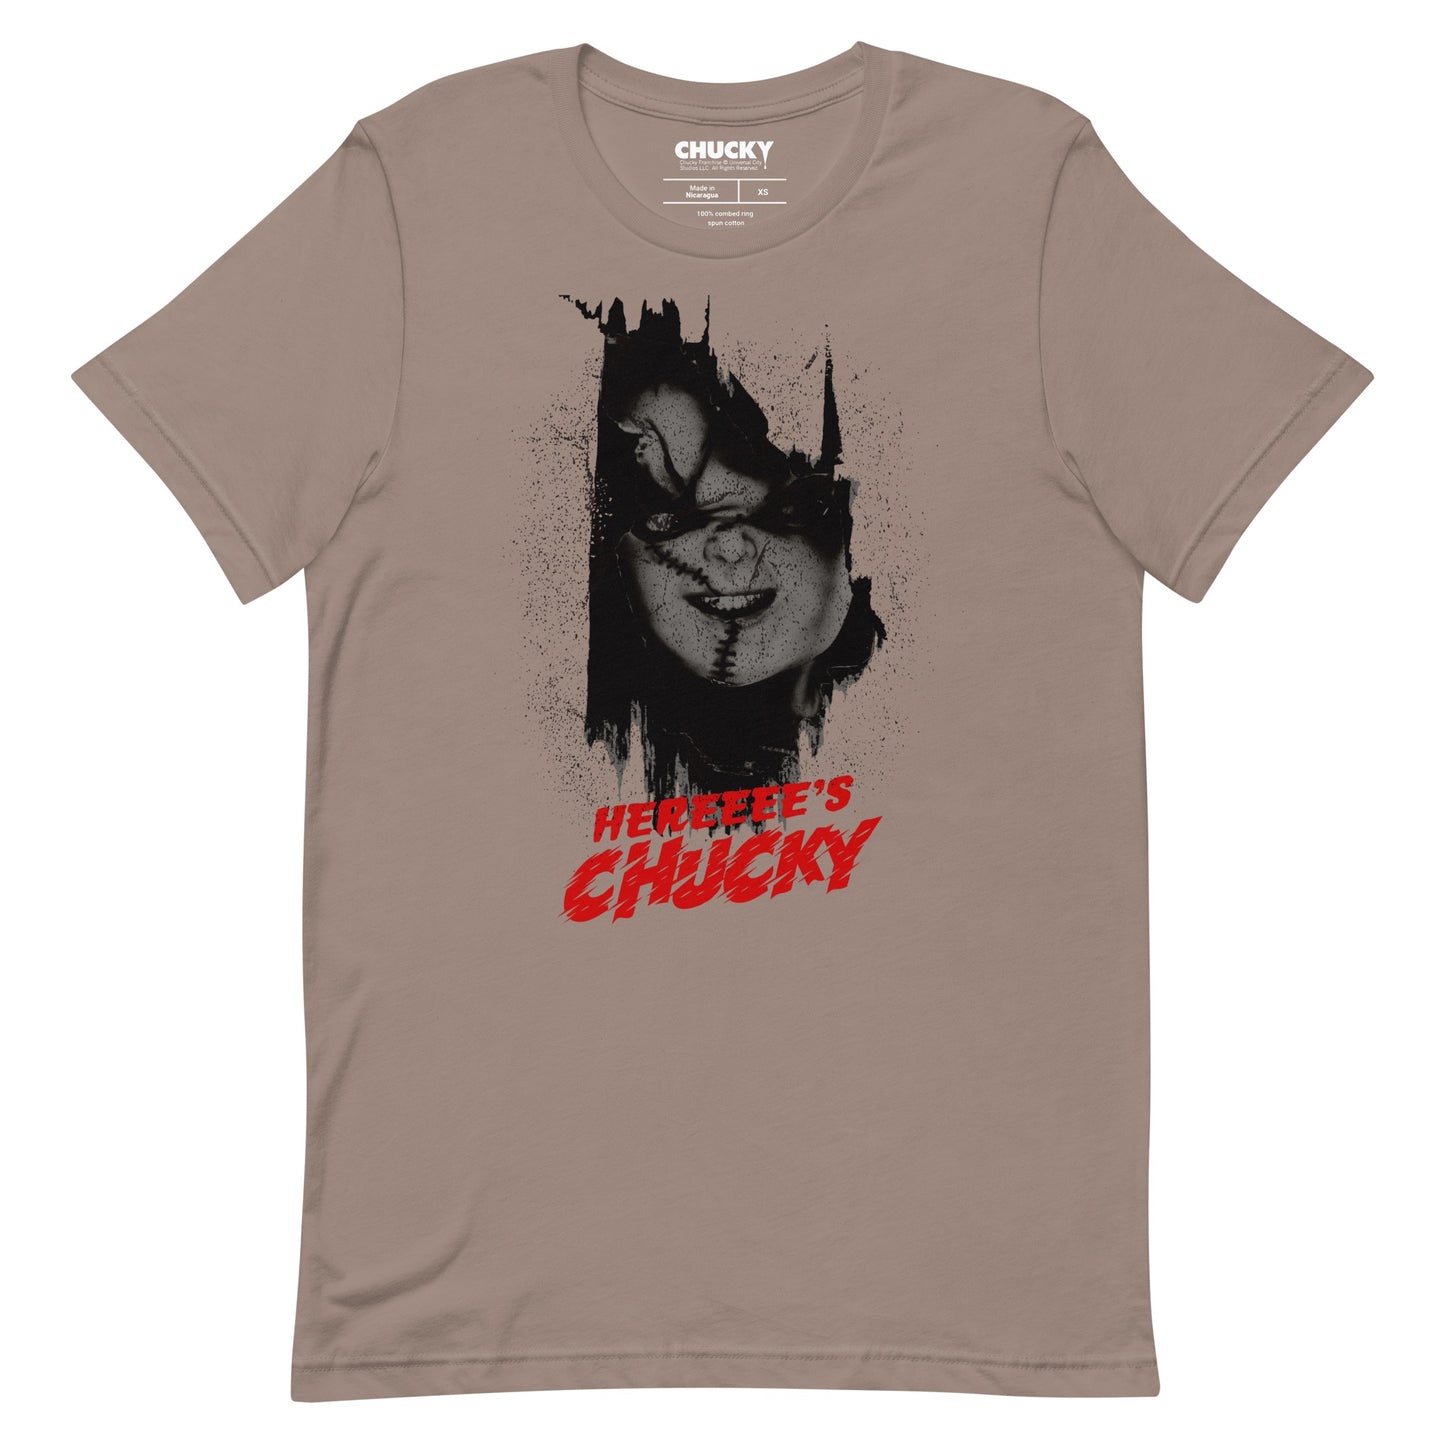 Chucky Here's Chucky  T-Shirt